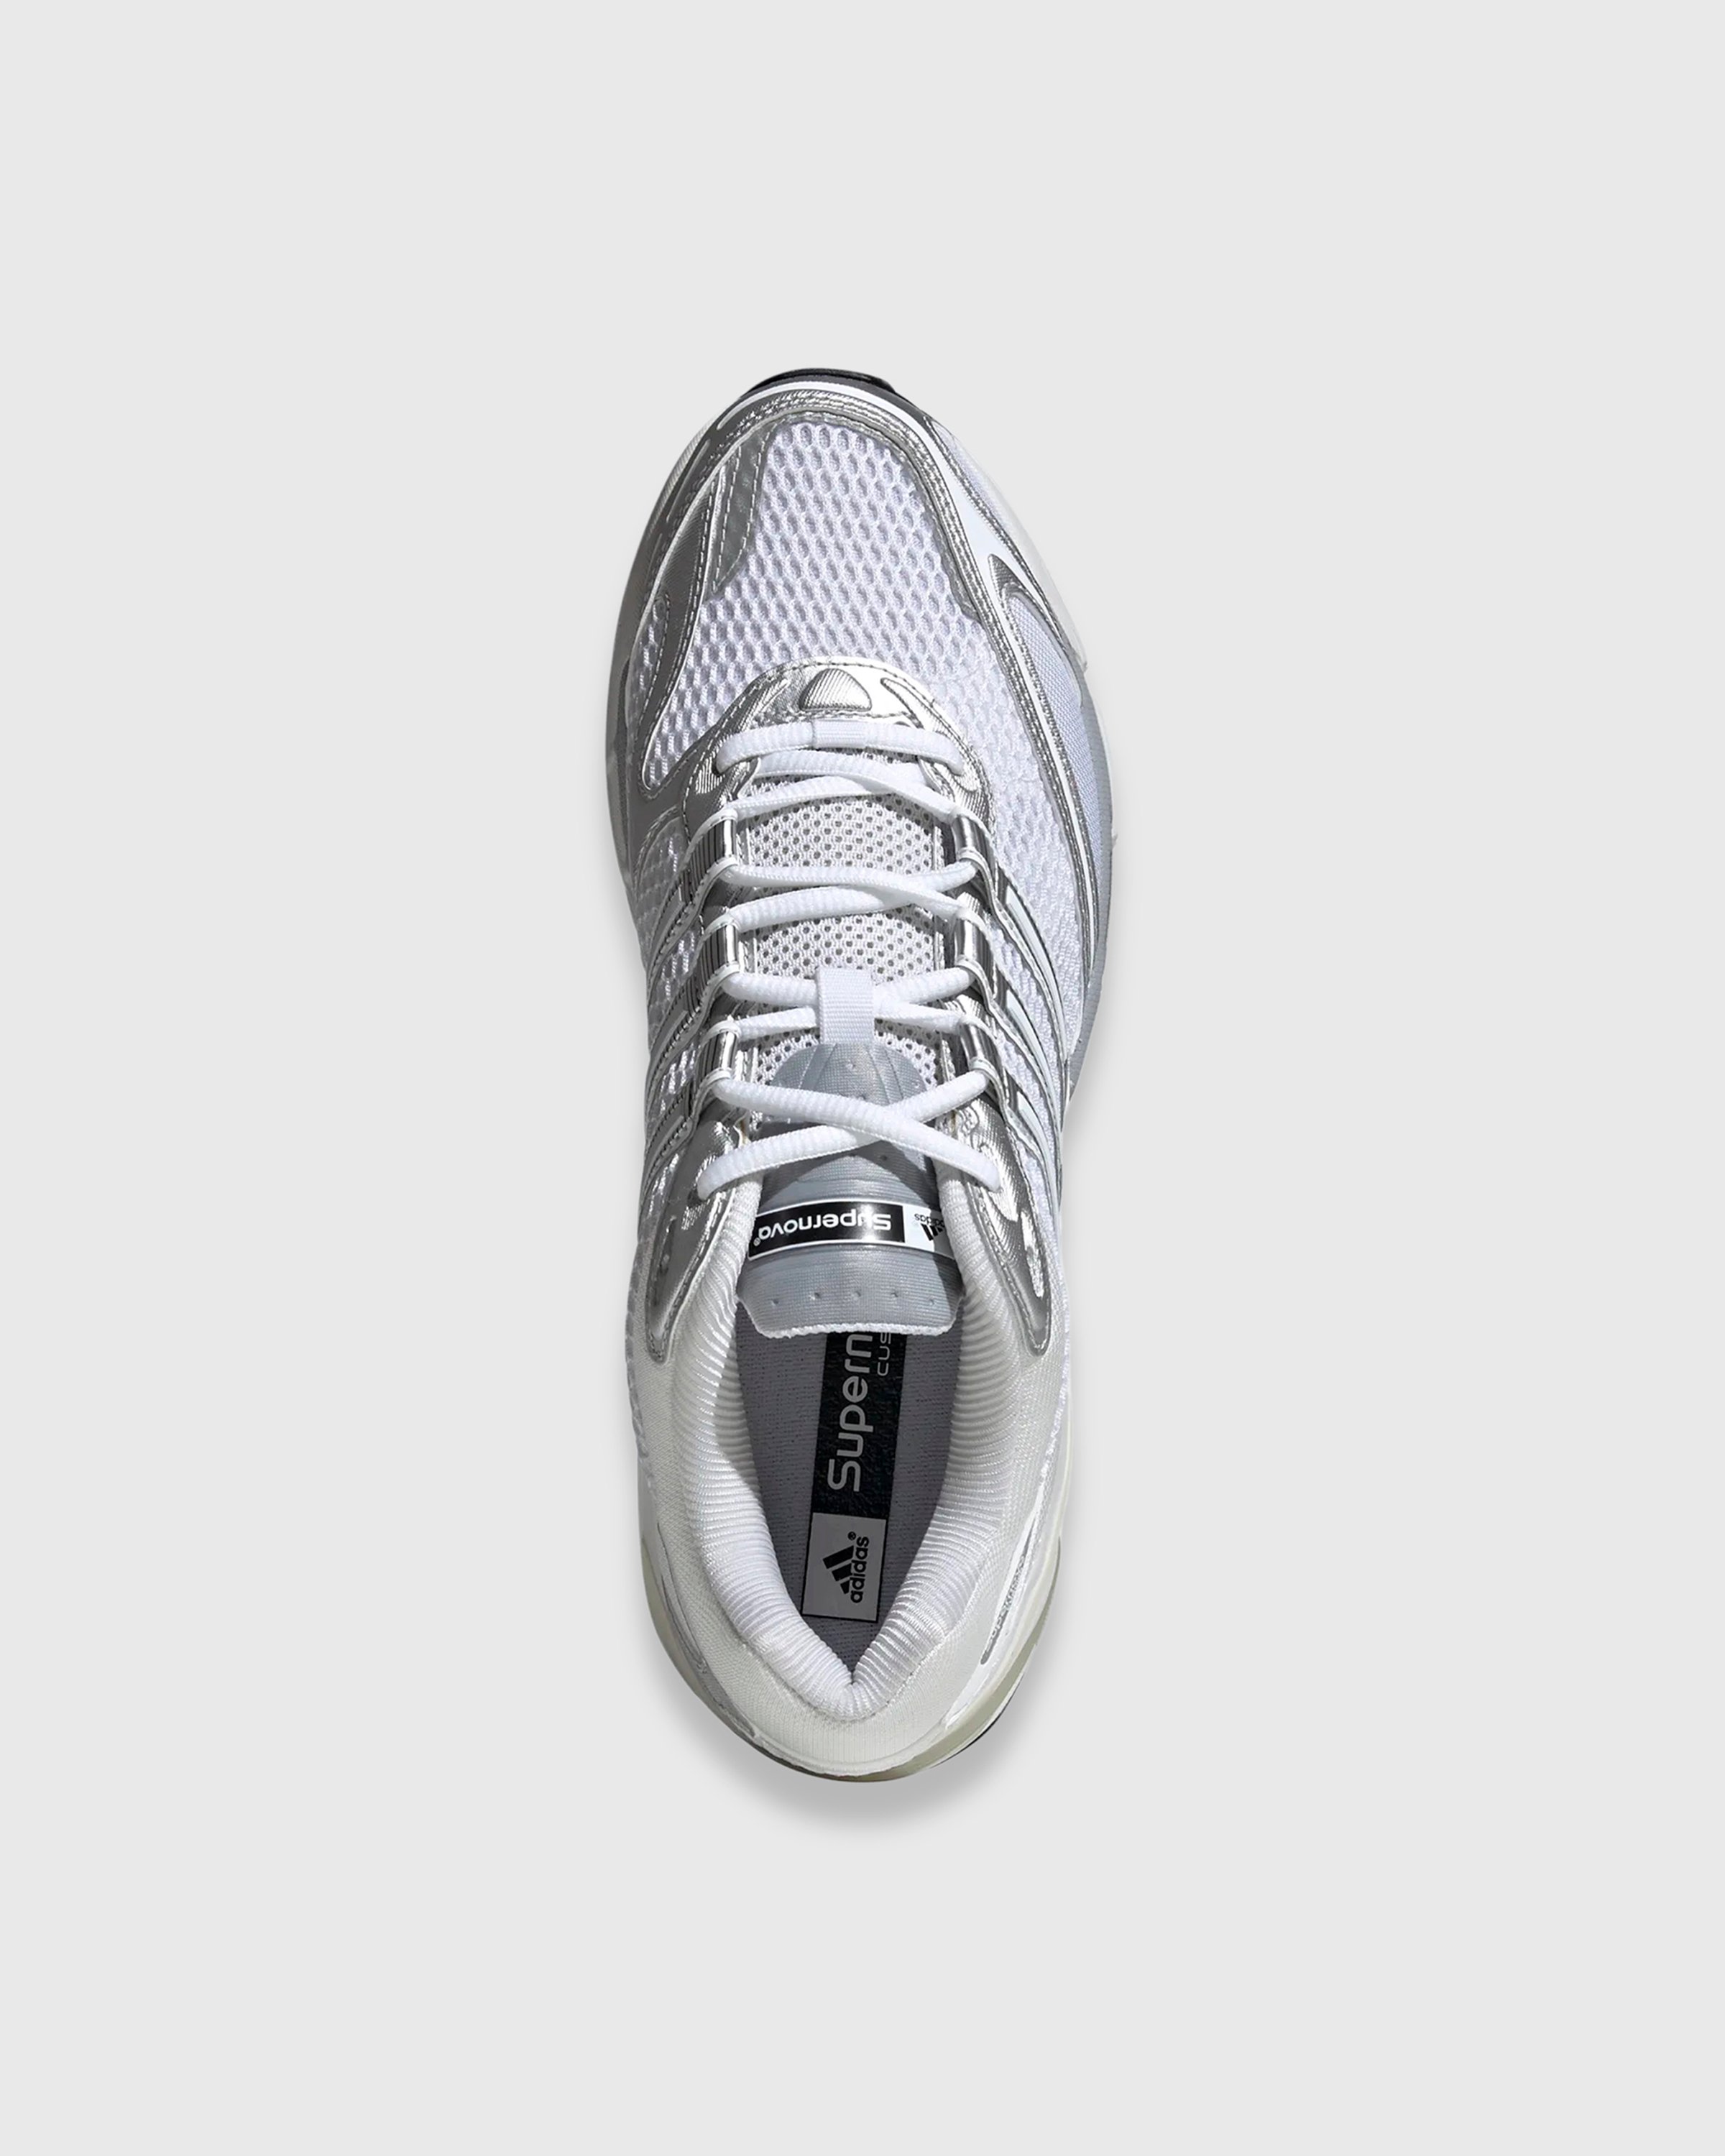 Adidas - SUPERNOVA CUSHION 7 FTWWHT/SILVMT/CRYWHT - Footwear - White - Image 5